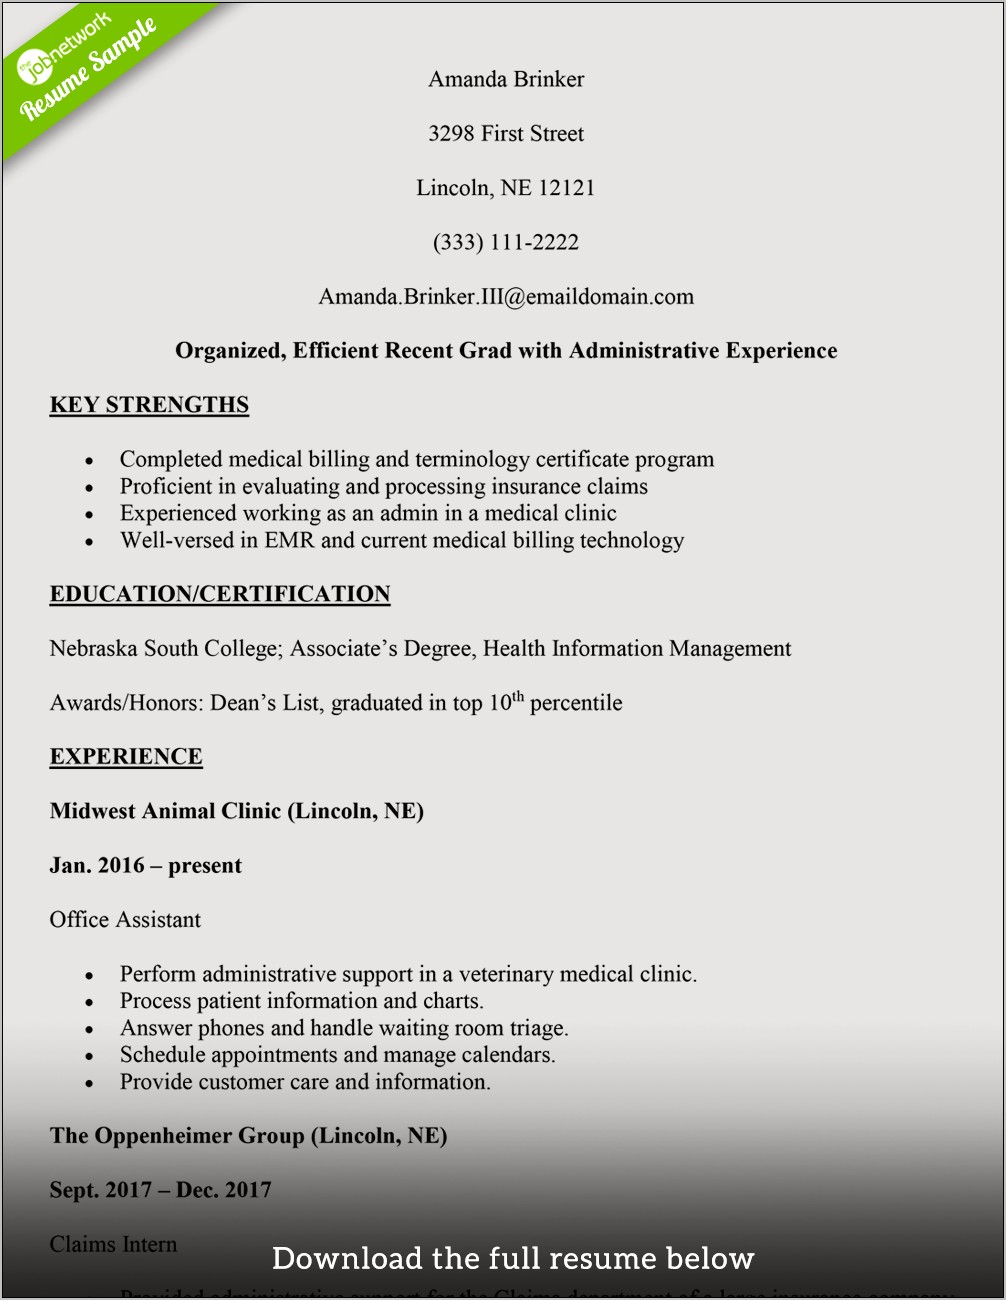 Sample Resume For Medical Billing And Coding Graduate